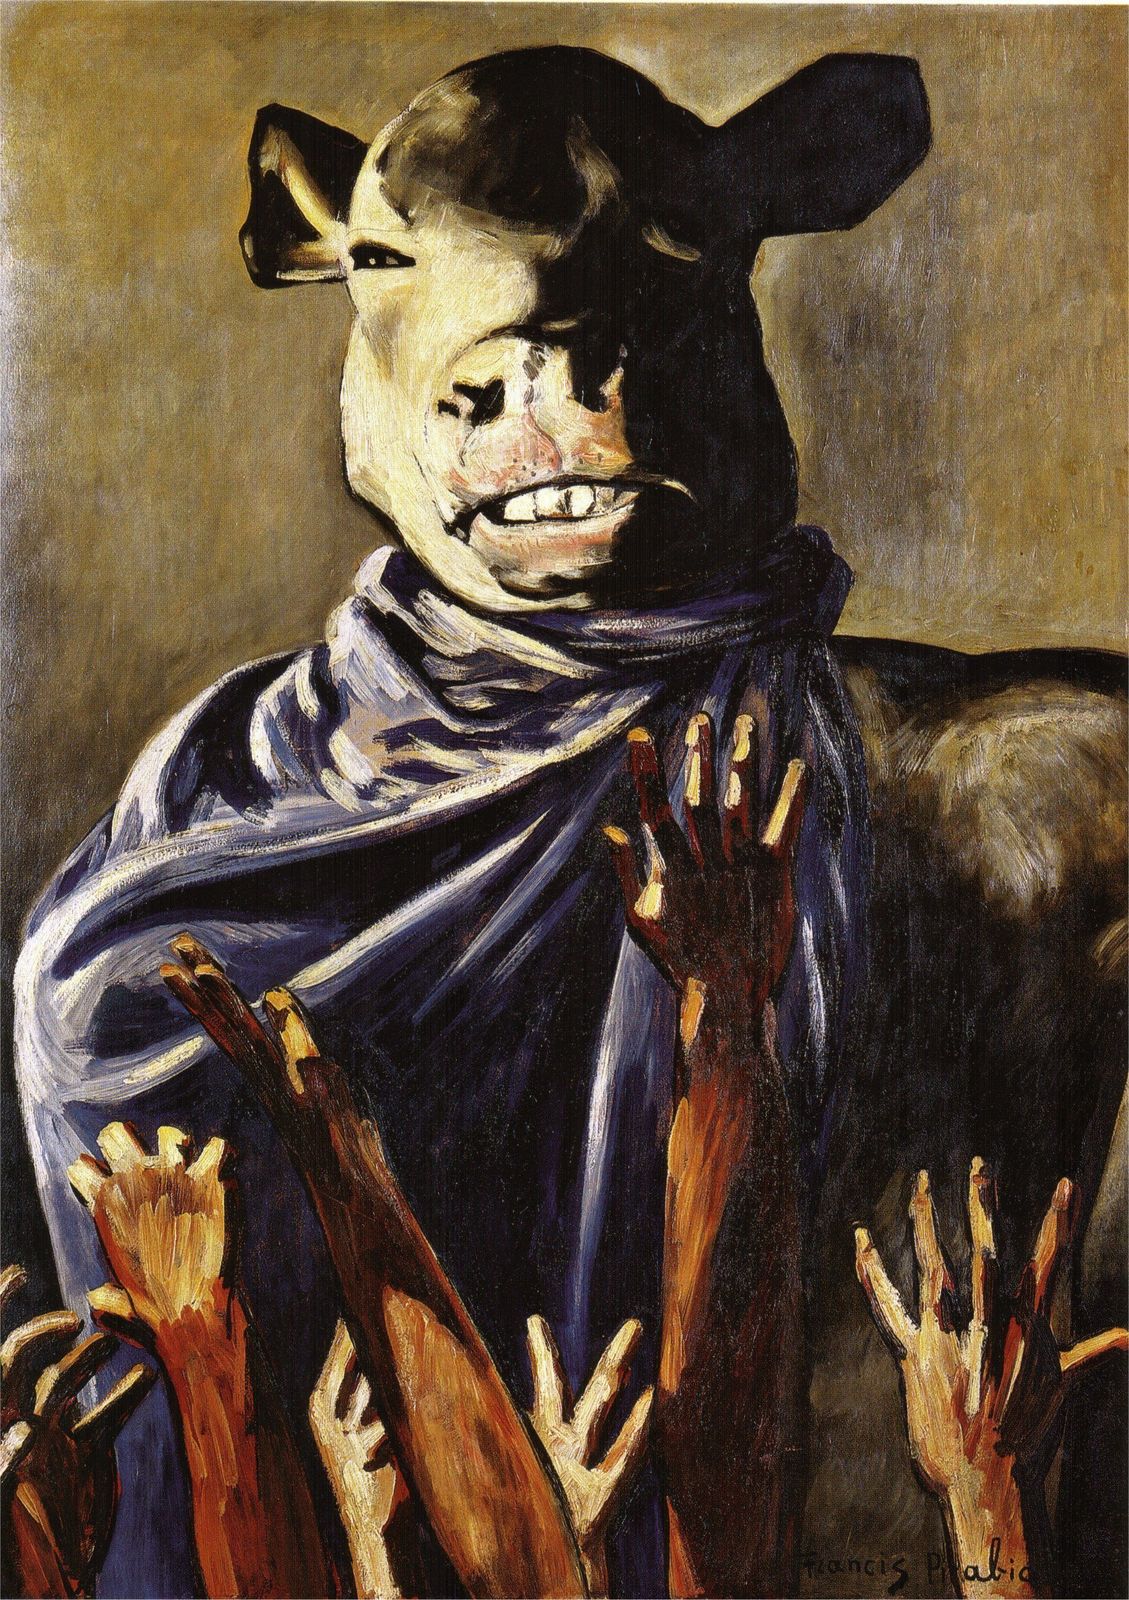 Francis Picabia. Calf Worship. 1941&ndash;42. Oil on canvas. Mus&eacute;e d&rsquo;Art Moderne, Paris